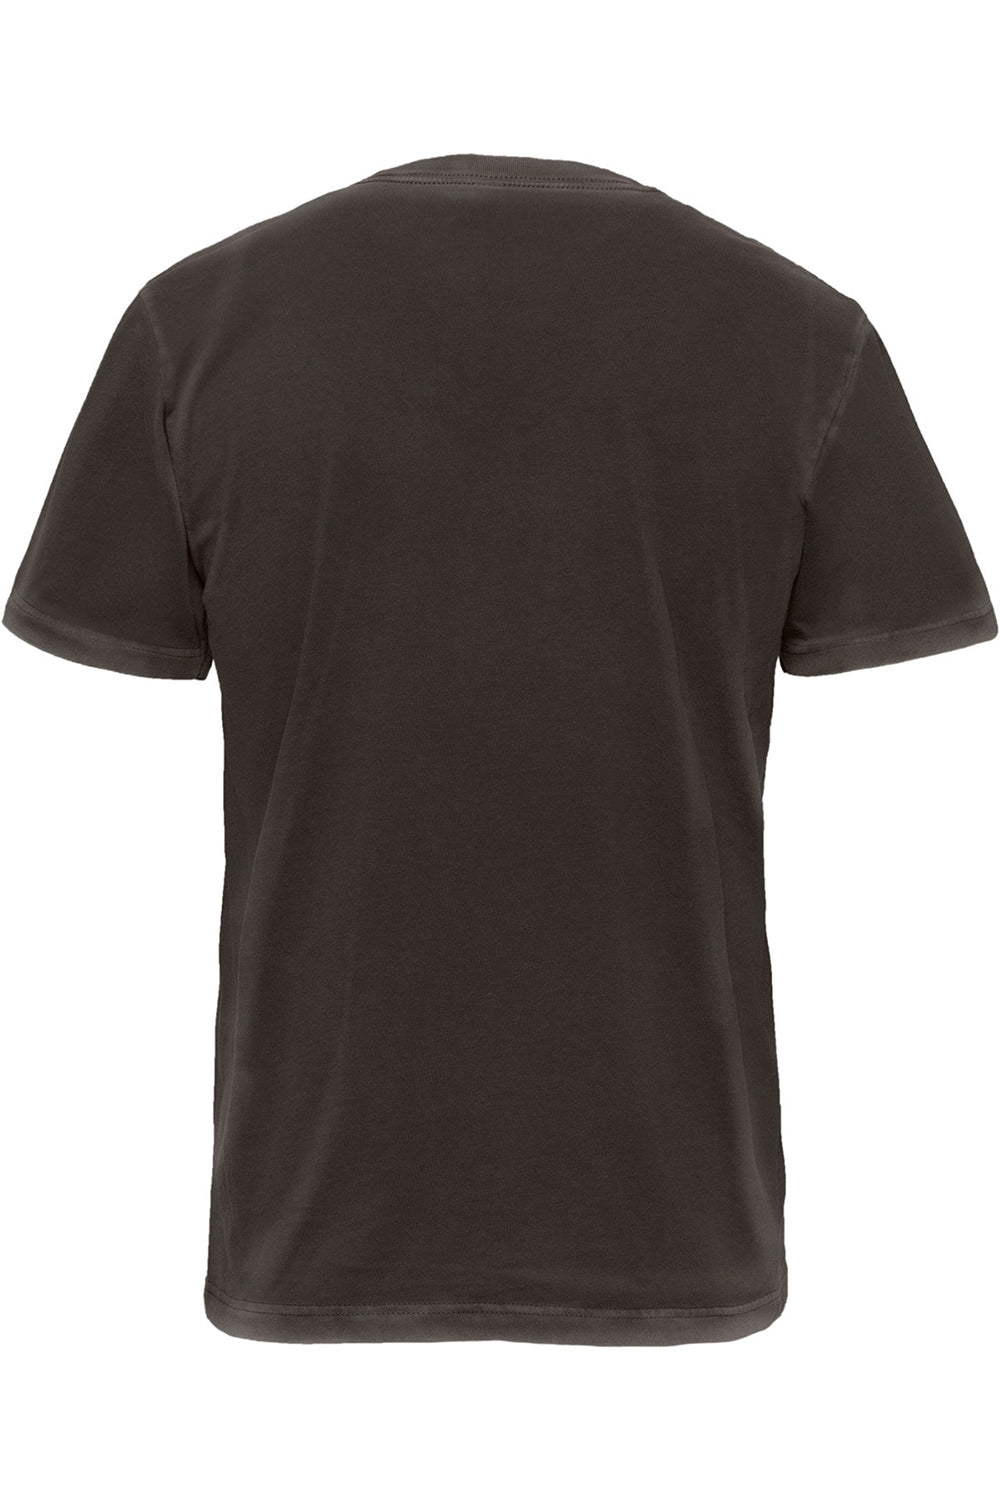 Next Level 3600SW Mens Soft Wash Short Sleeve Crewneck T-Shirt Graphite Black Flat Back